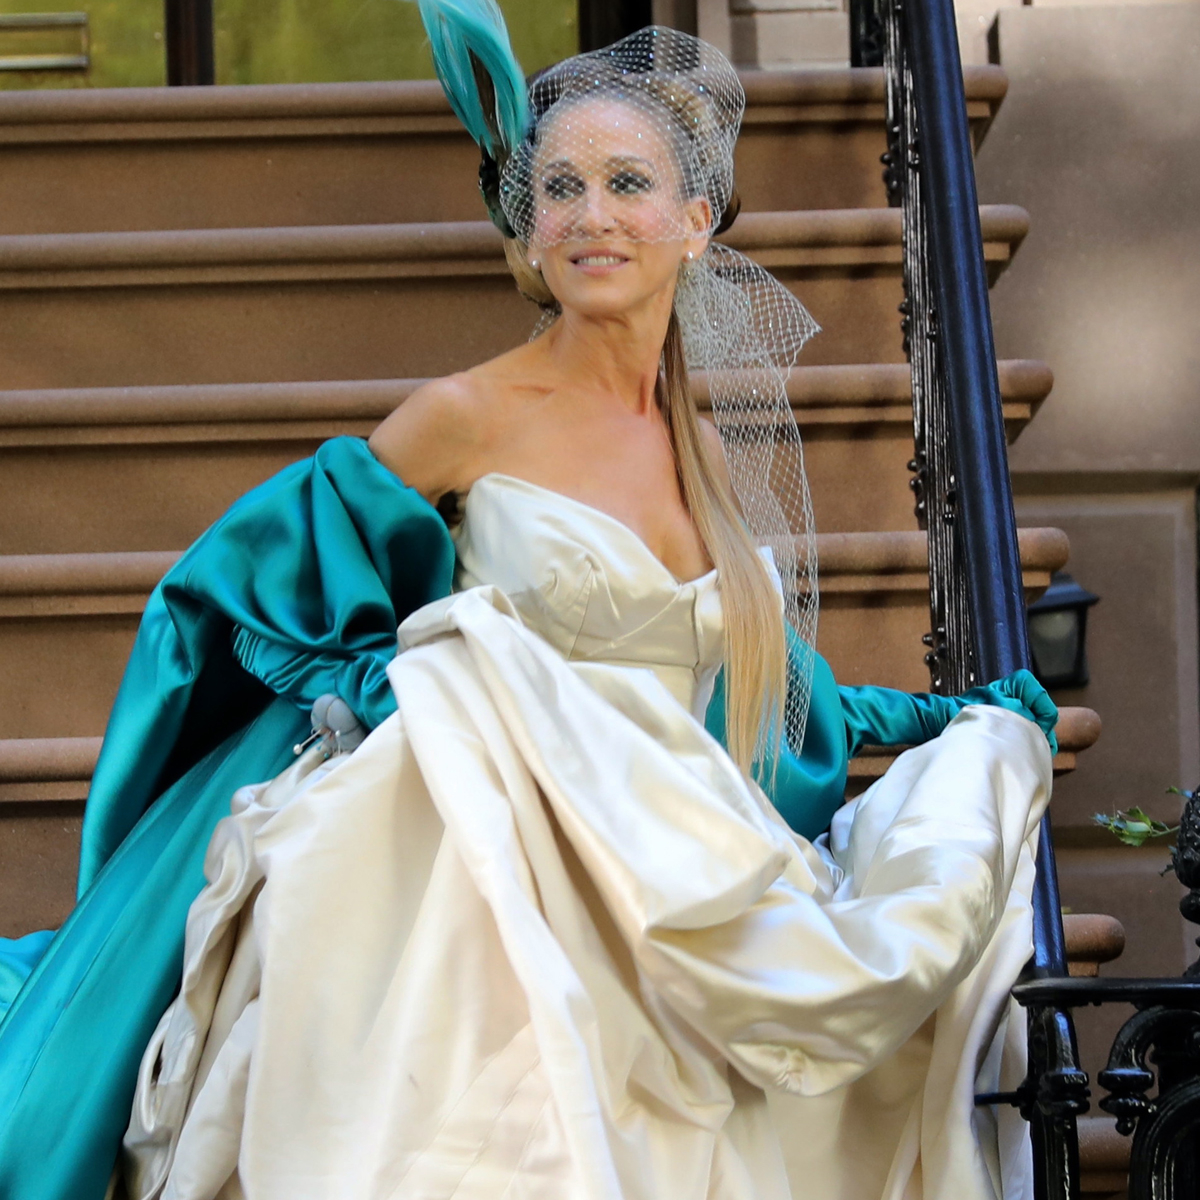 Sarah Jessica Parker Brings Back Carrie's Wedding Dress in 'AJLT